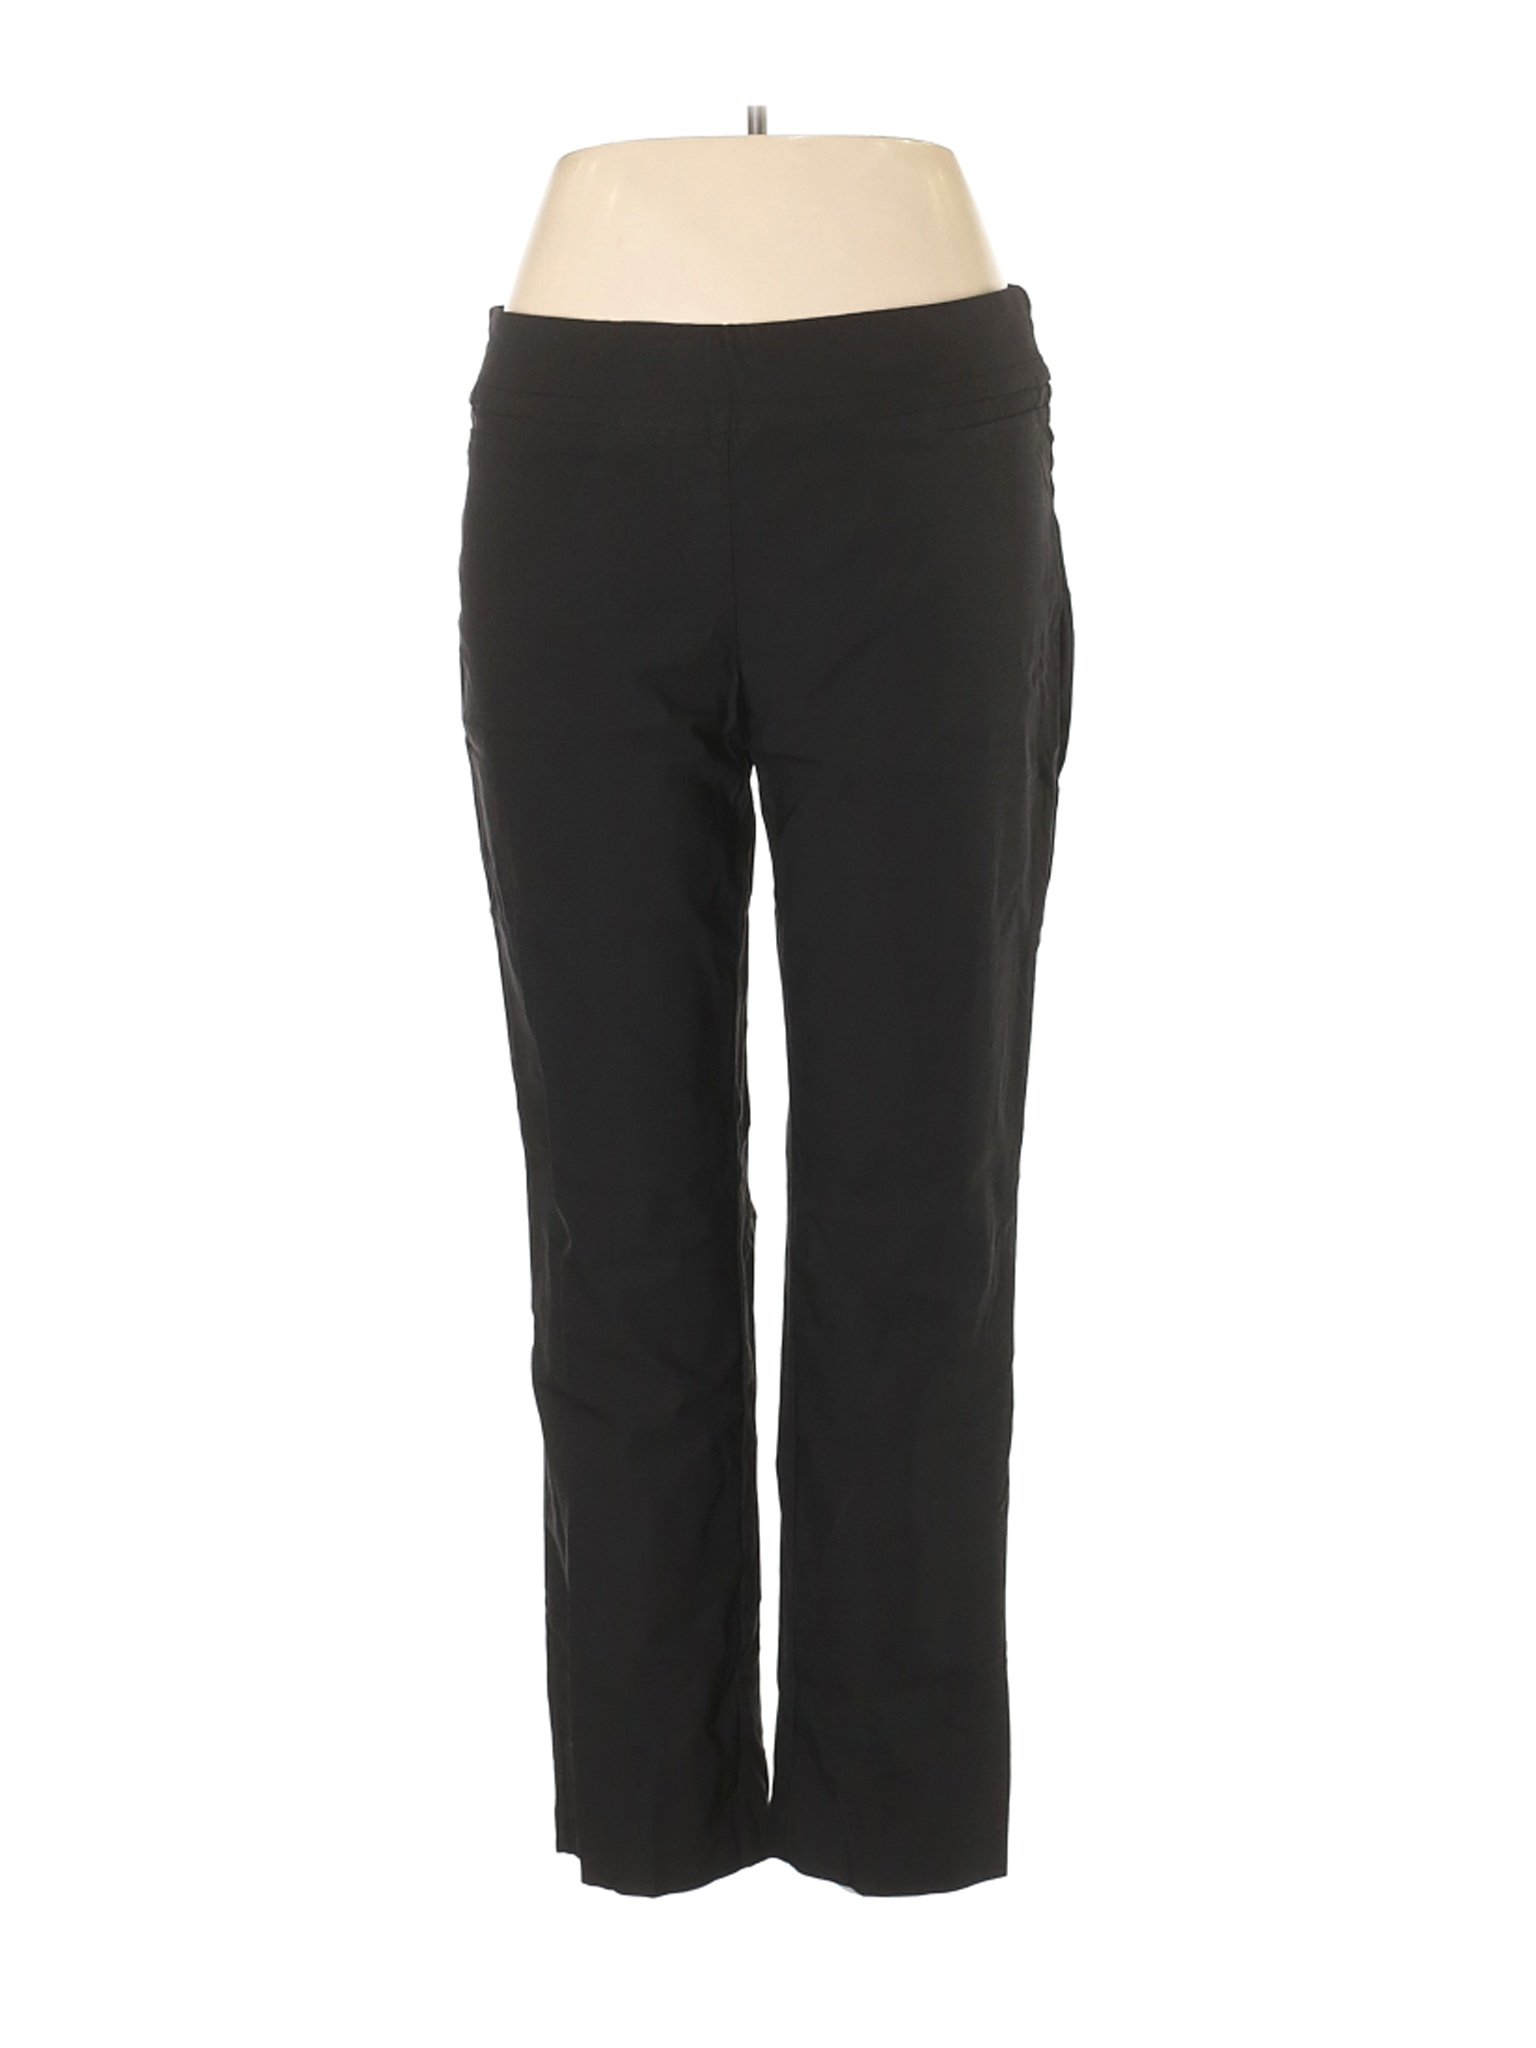 Hilary Radley Women Black Casual Pants 14 | eBay